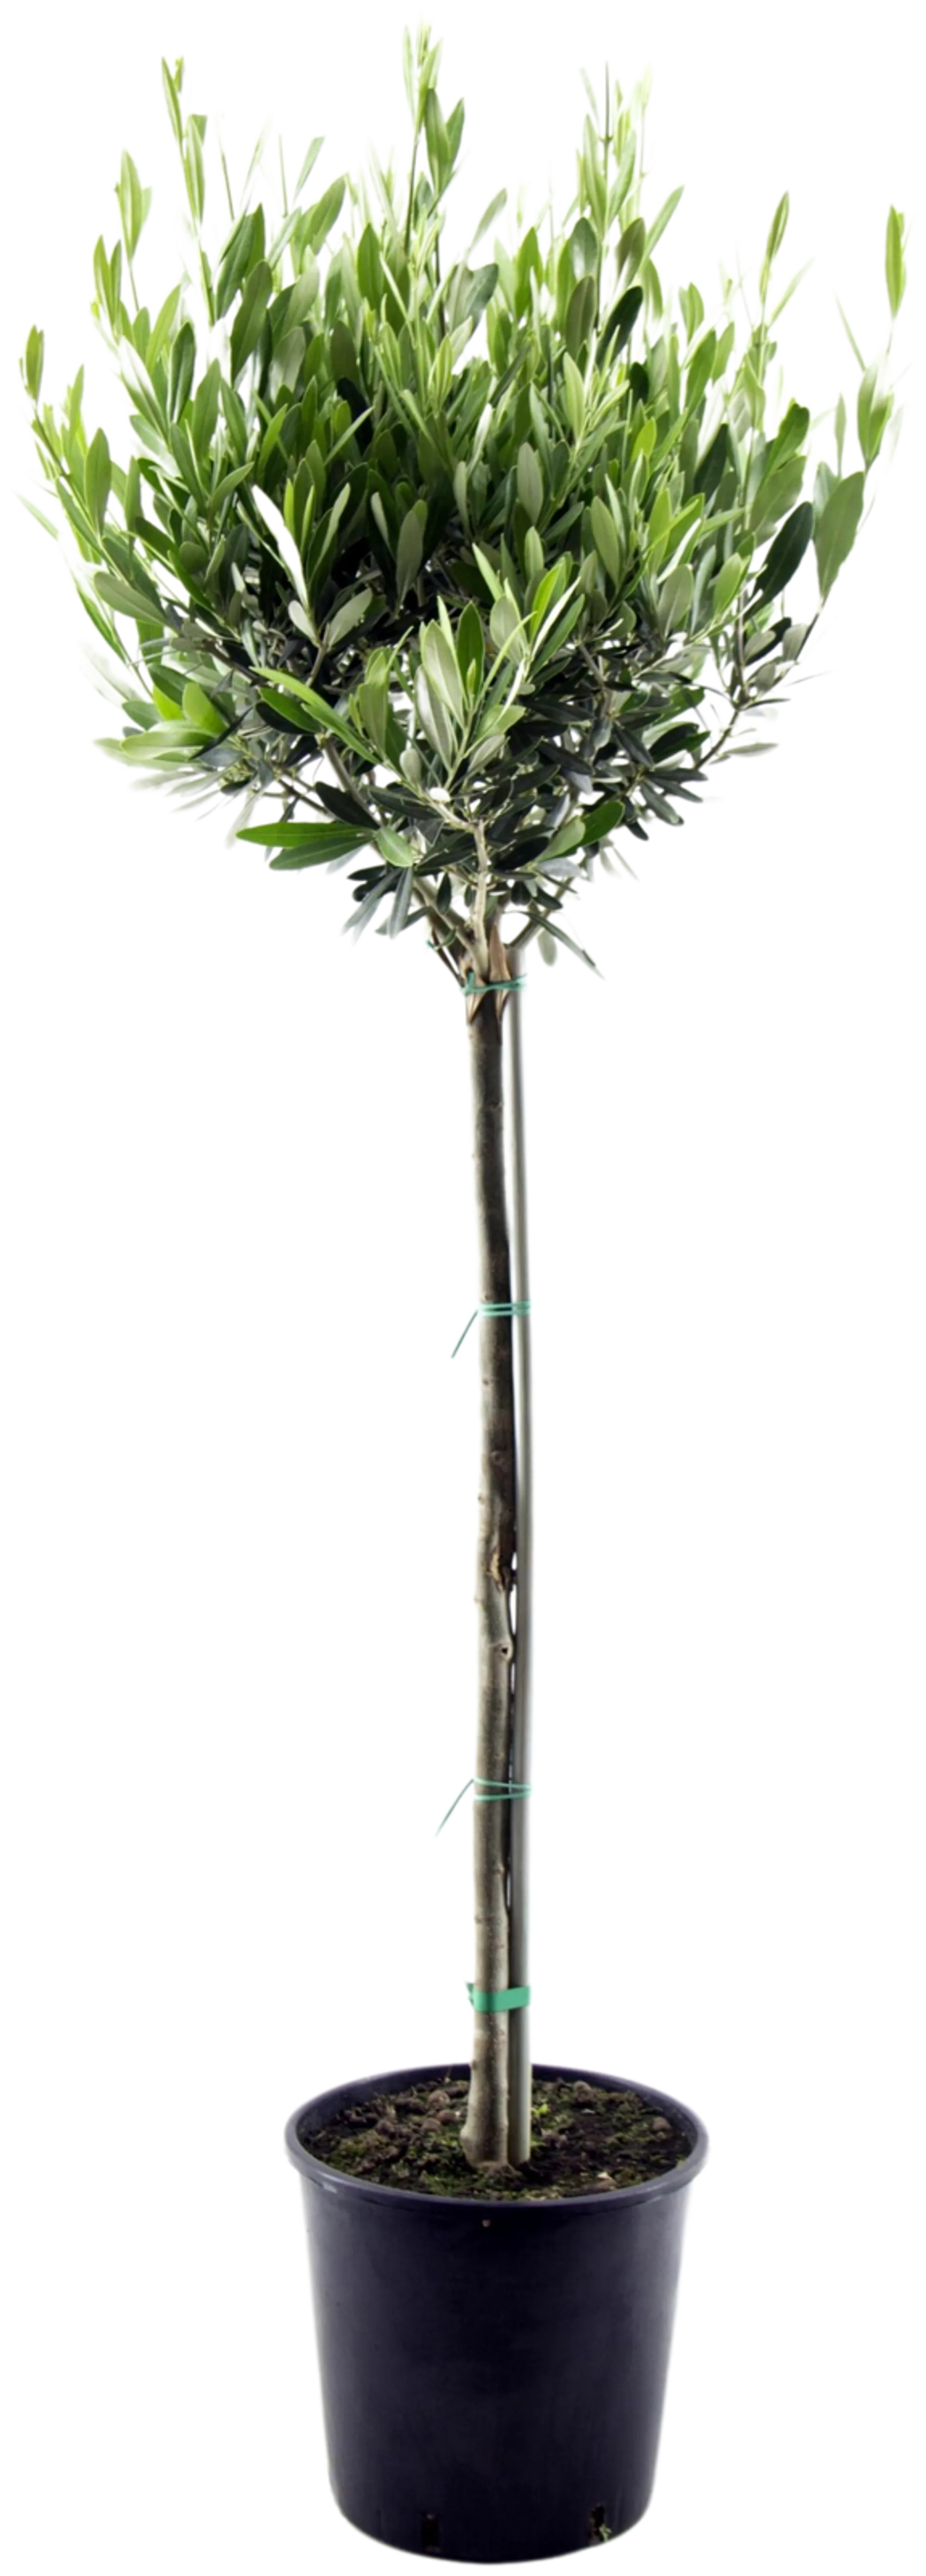 Oliivipuu 20 cm rungollinen 80-100 cm